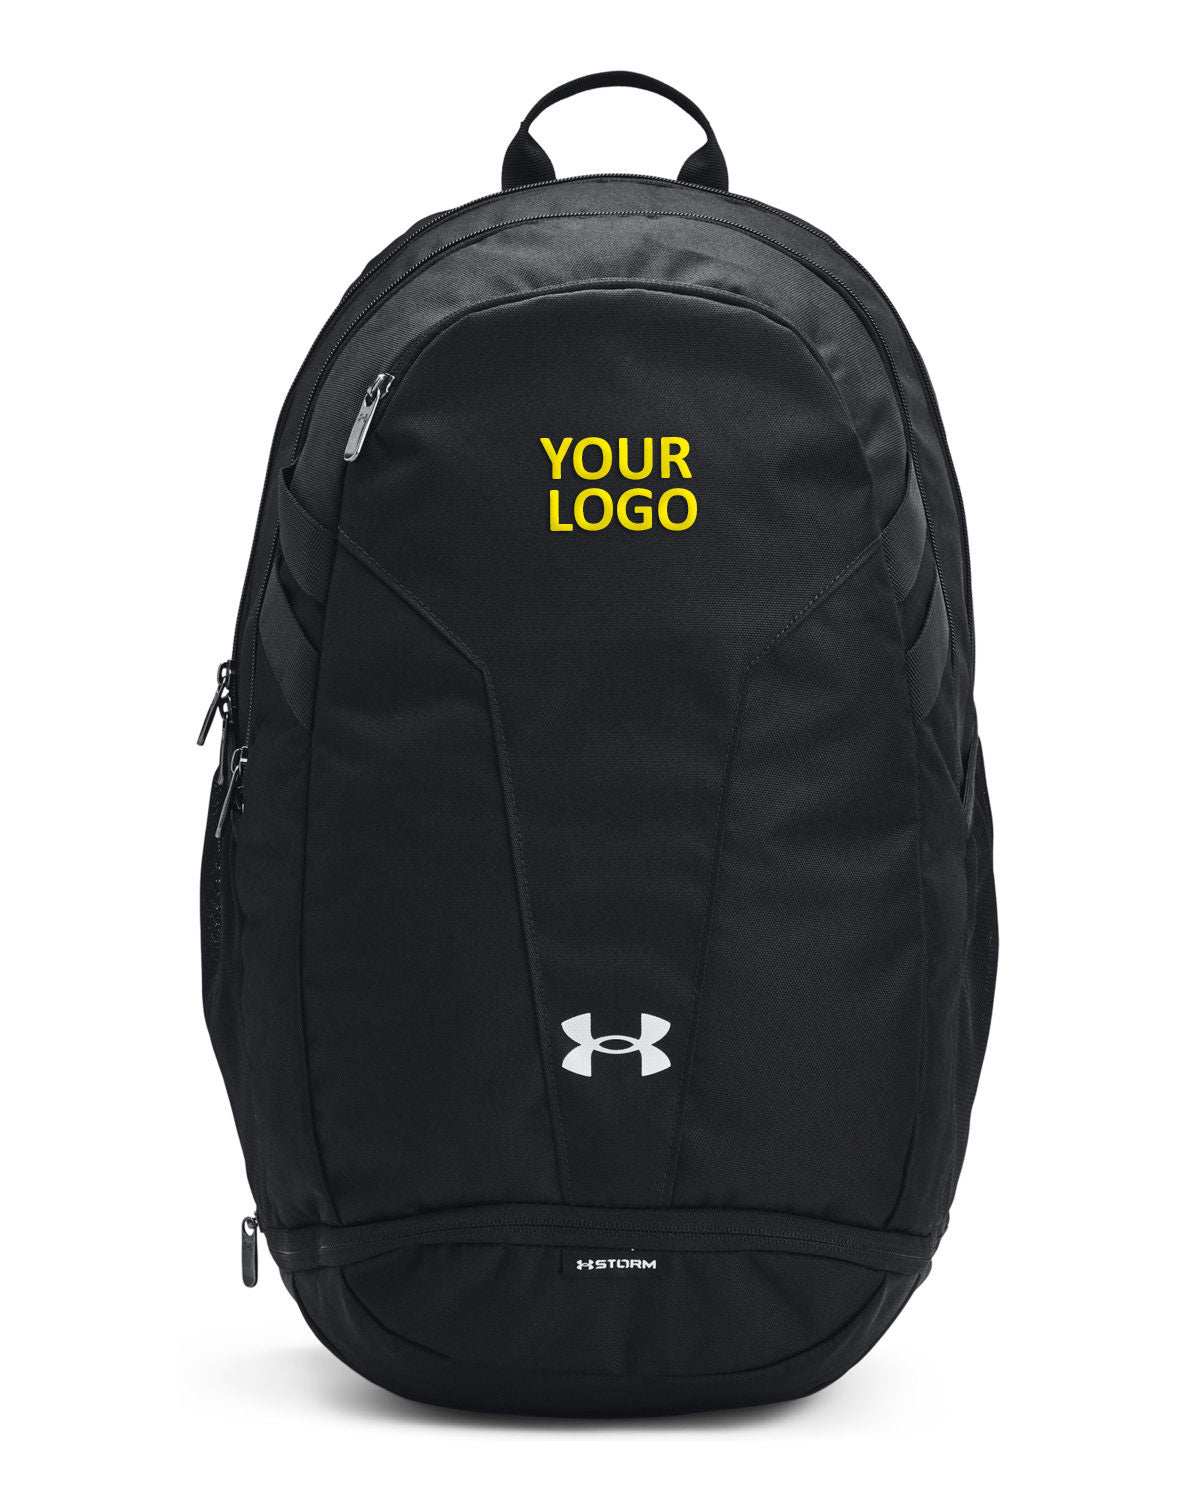 Under Armour Hustle Team Branded Backpacks, Black